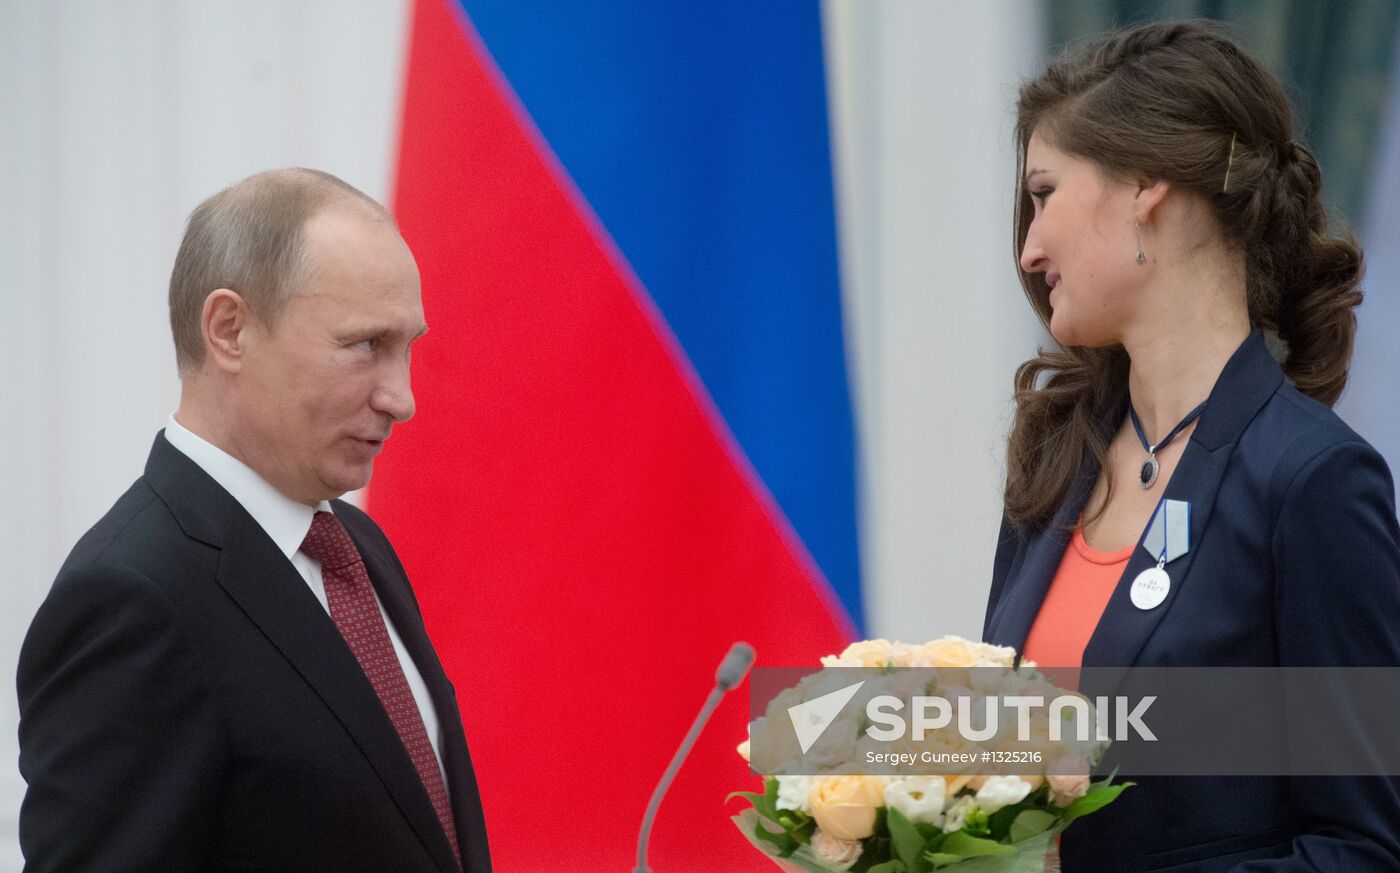 President Vladimir Putin presents state awards at the Kremlin